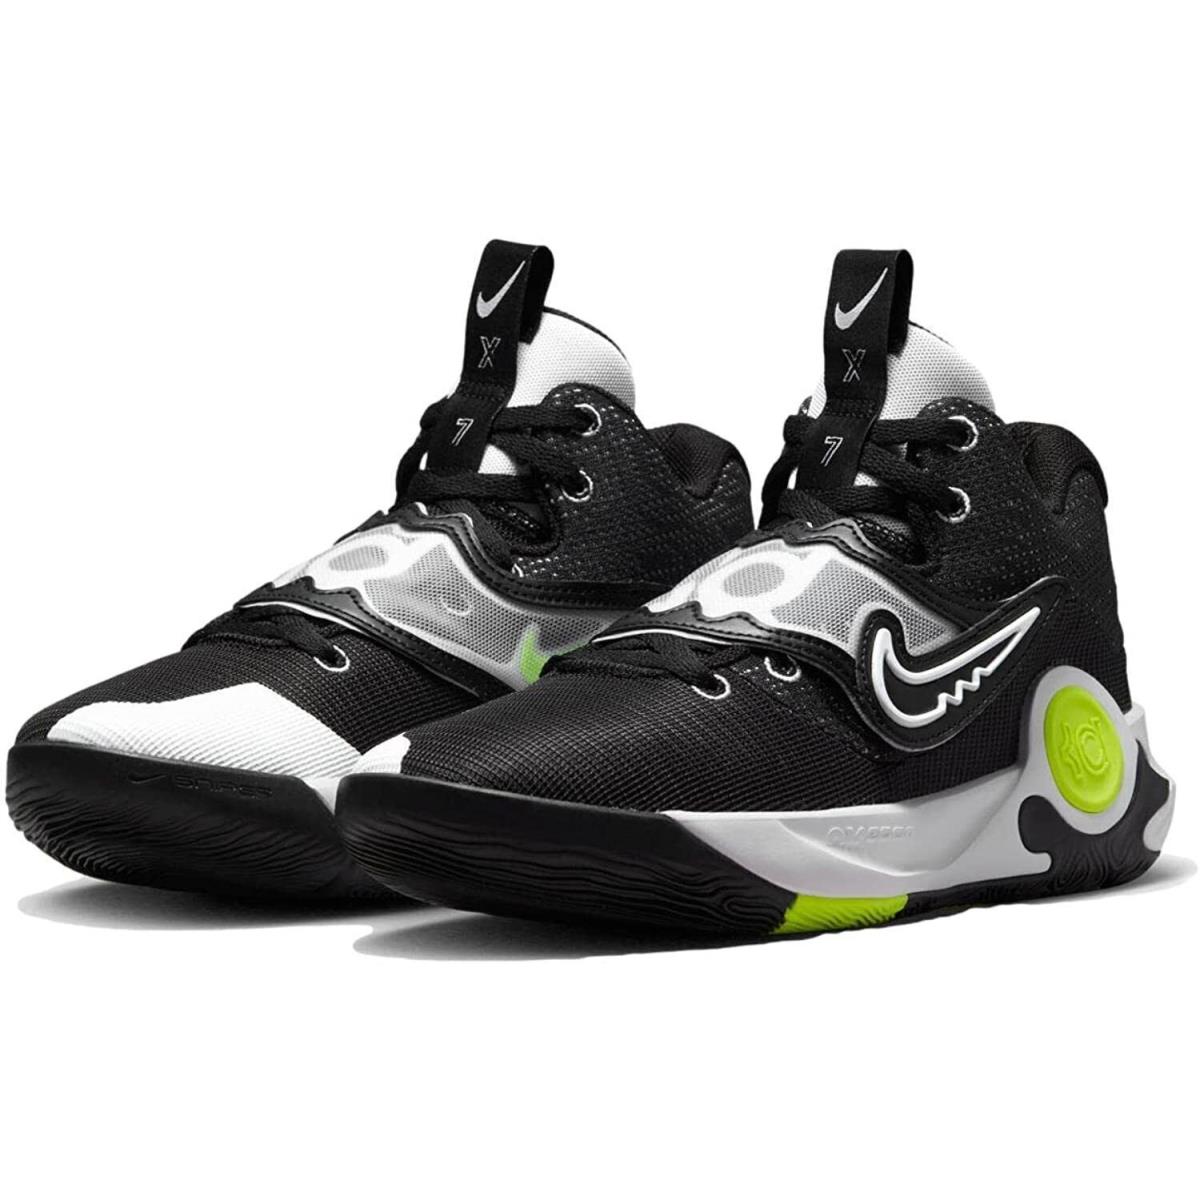 Mens Nike DD9538 007 KD Trey 5 X Clear Black/white Basketball Shoes Sneakers - BLACK/WHITE/VOLT